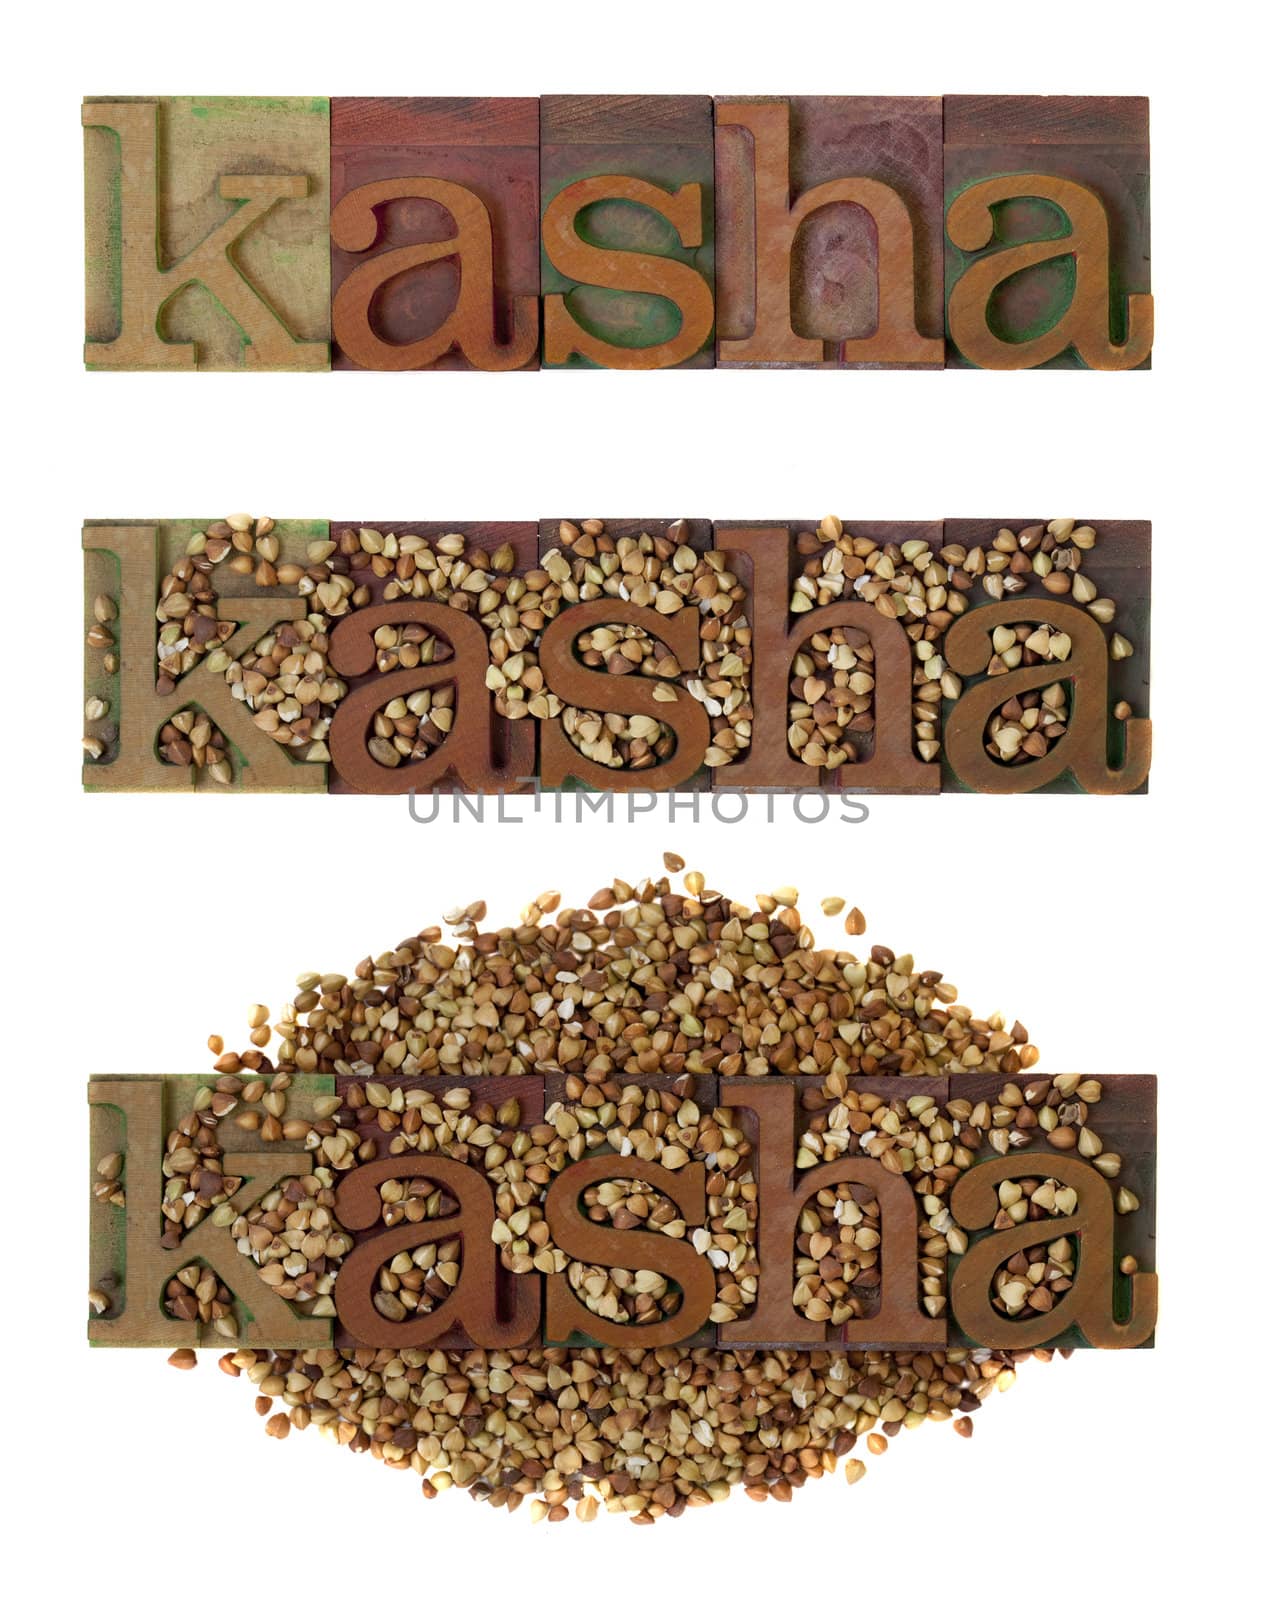 kasha - roasted buckwheat by PixelsAway